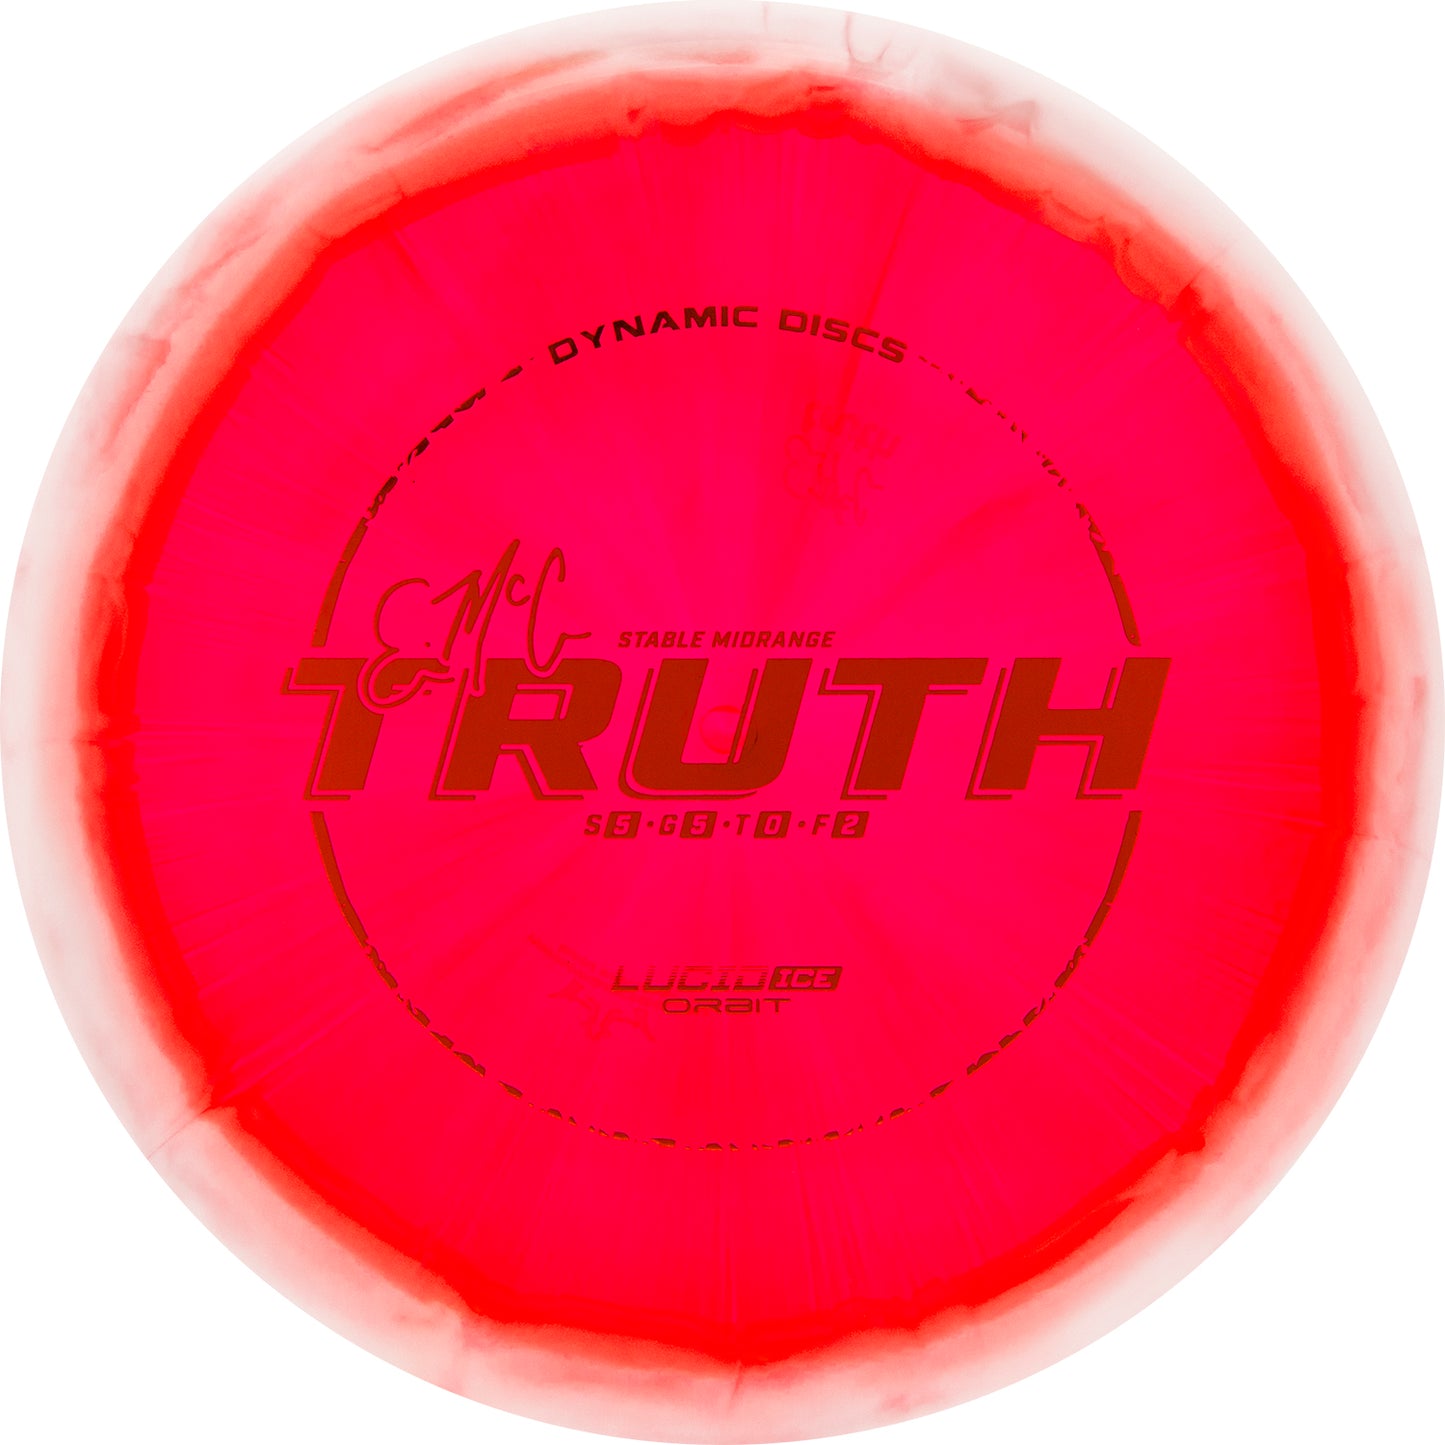 Dynamic Discs Lucid-Ice Orbit EMAC Truth